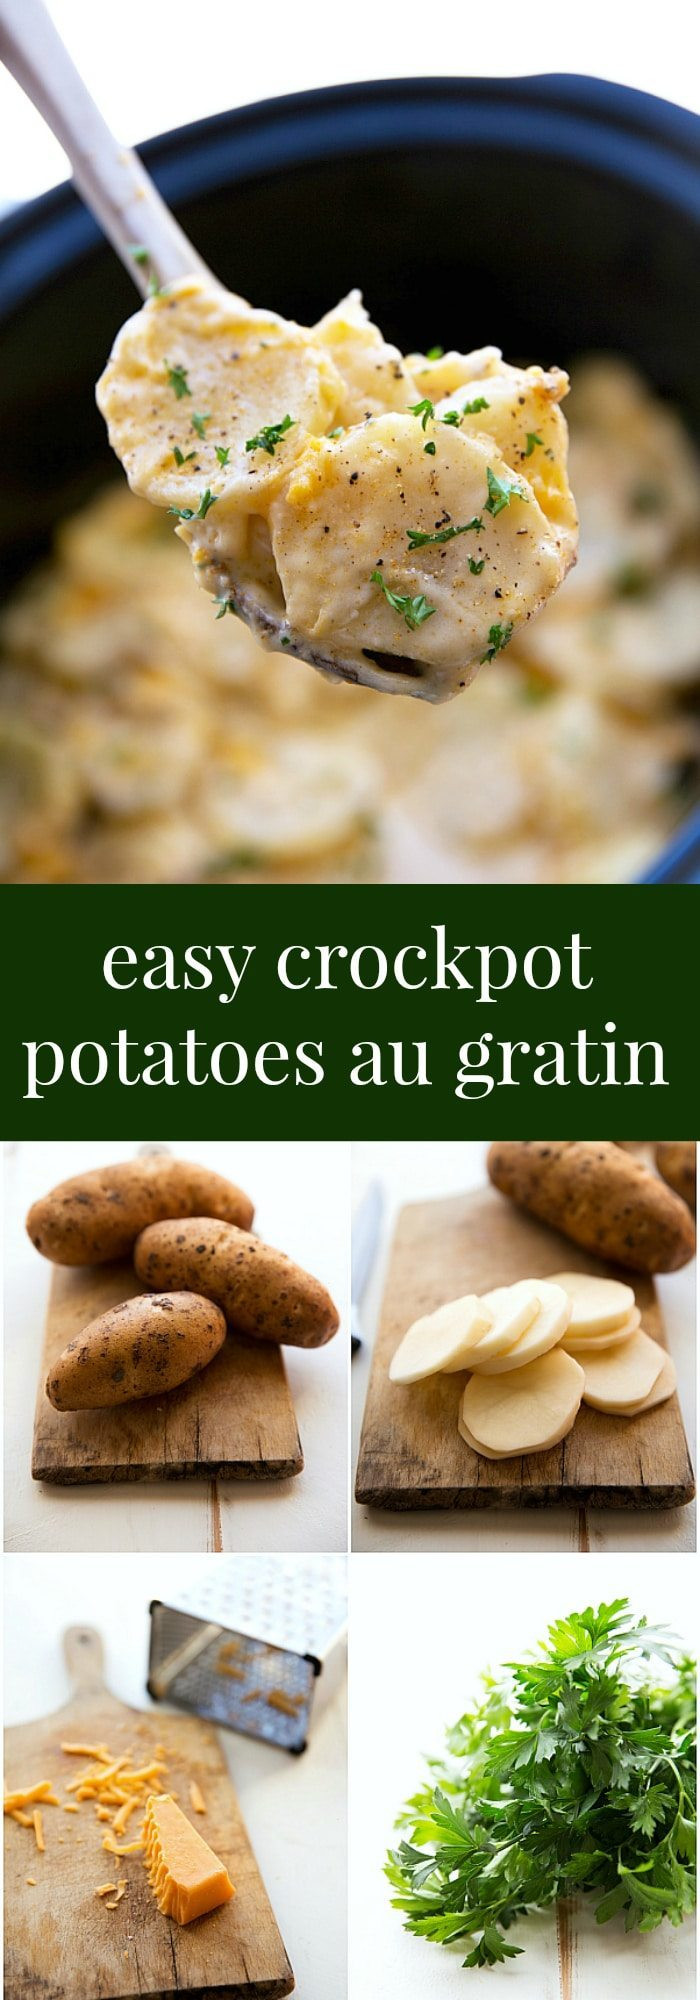 Crockpot Au Gratin Potatoes
 Crockpot Potatoes Au Gratin